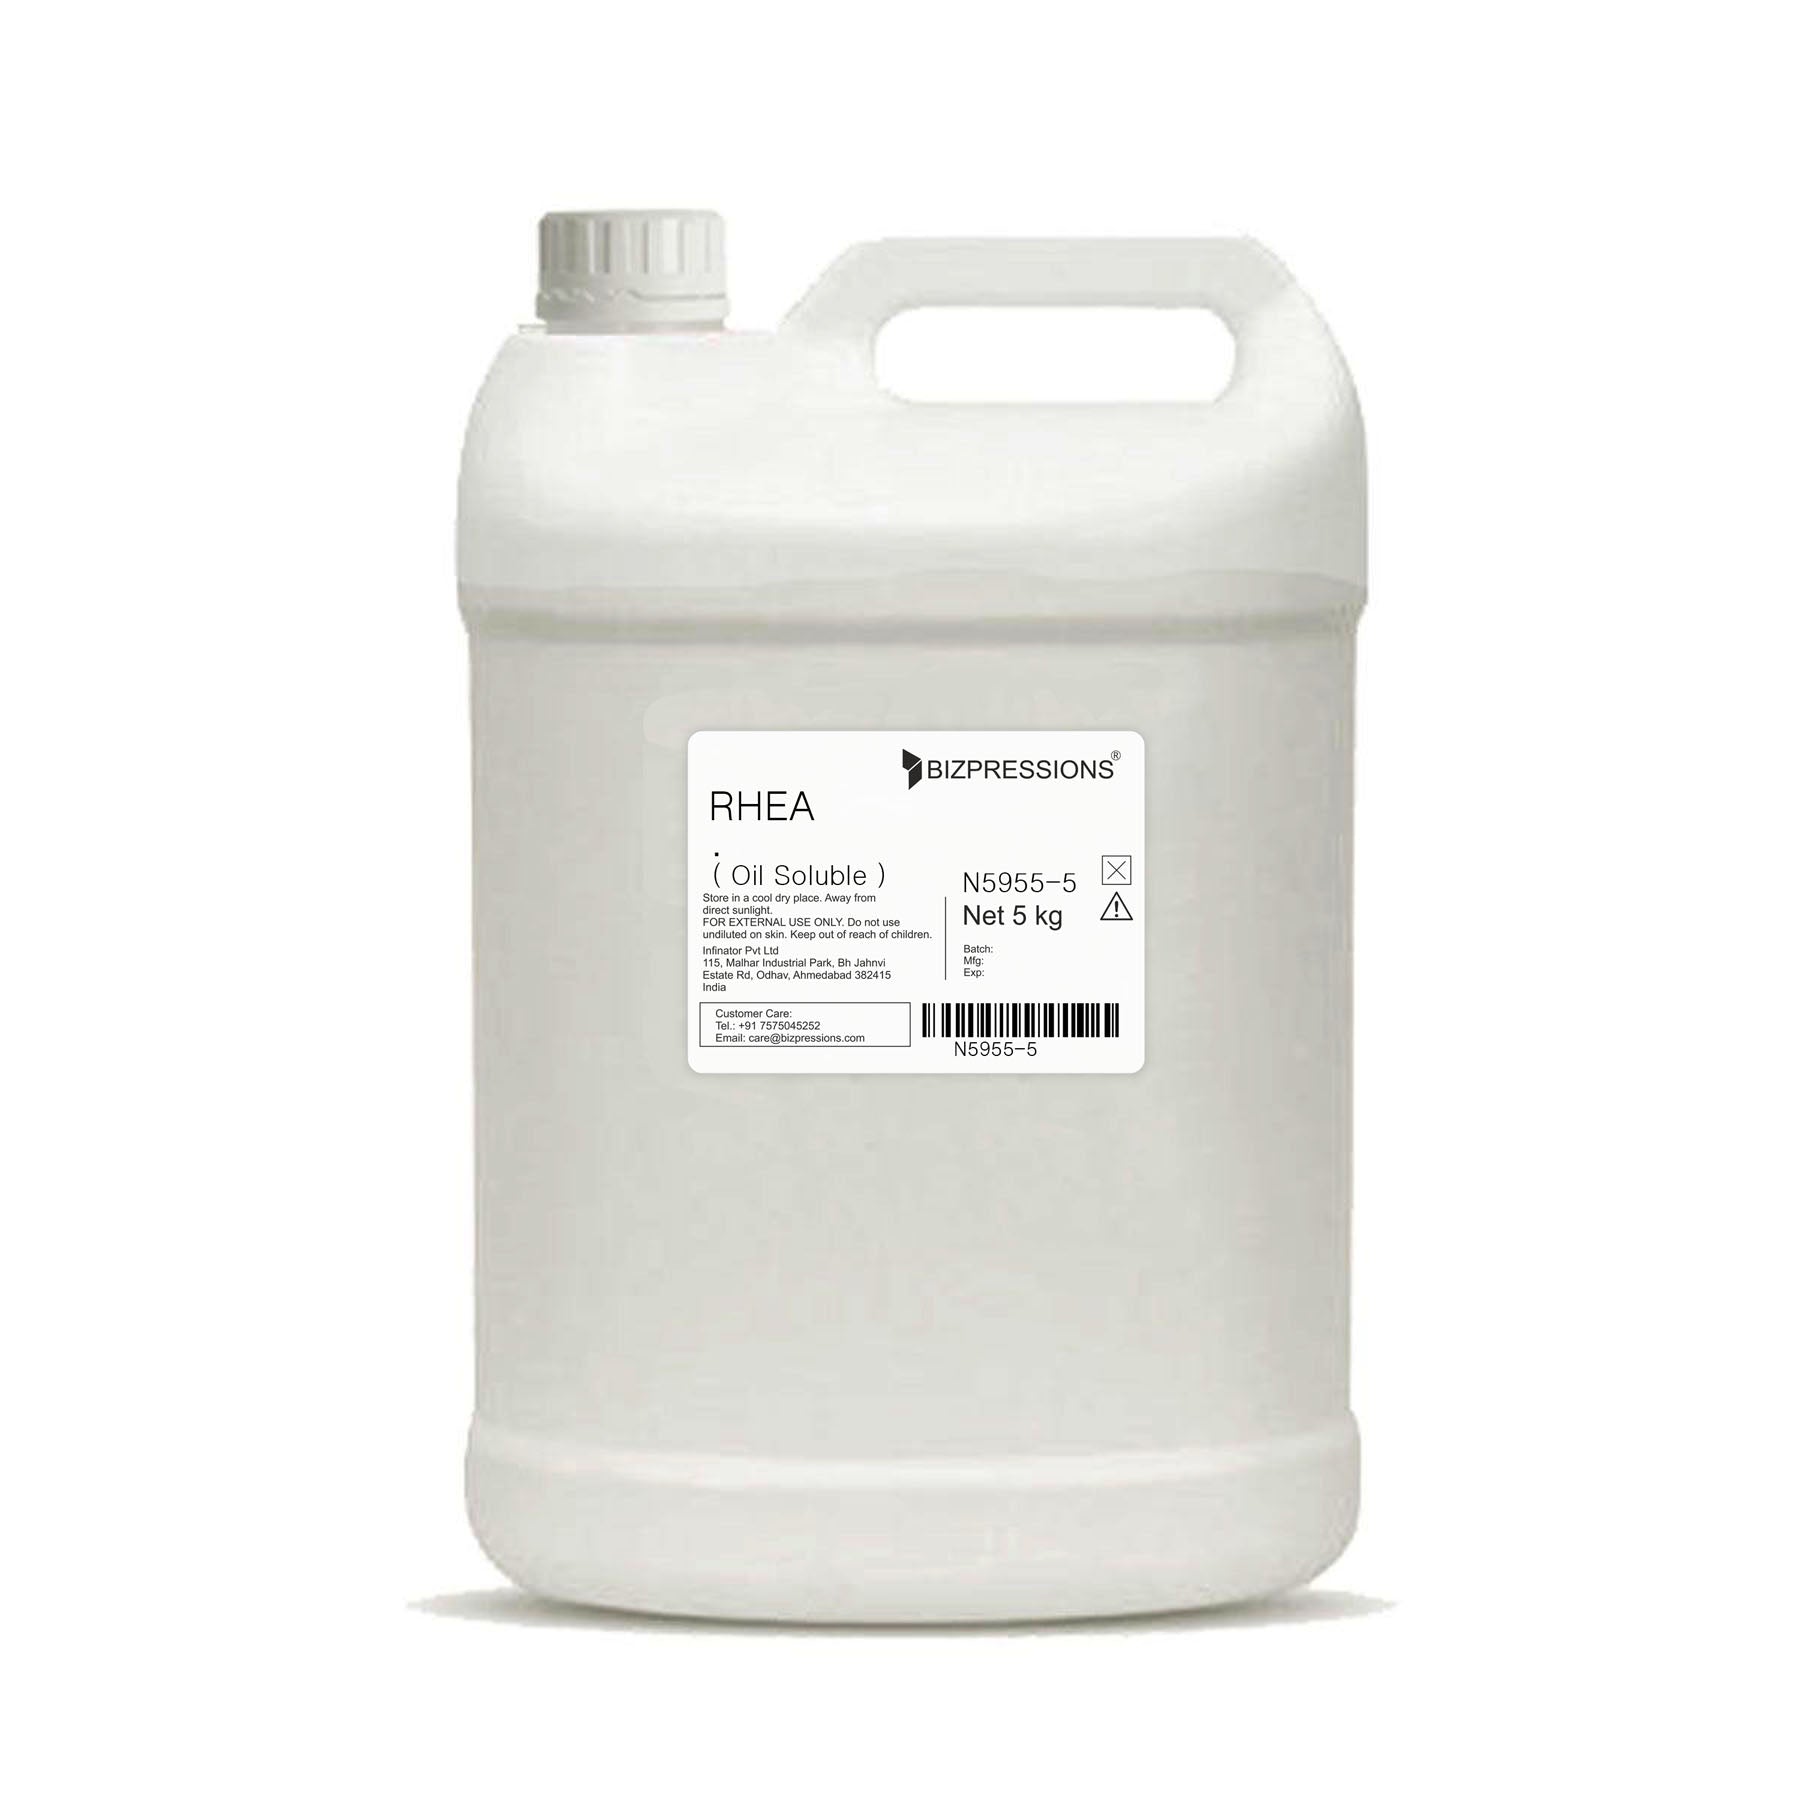 RHEA - Fragrance ( Oil Soluble ) - 5 kg